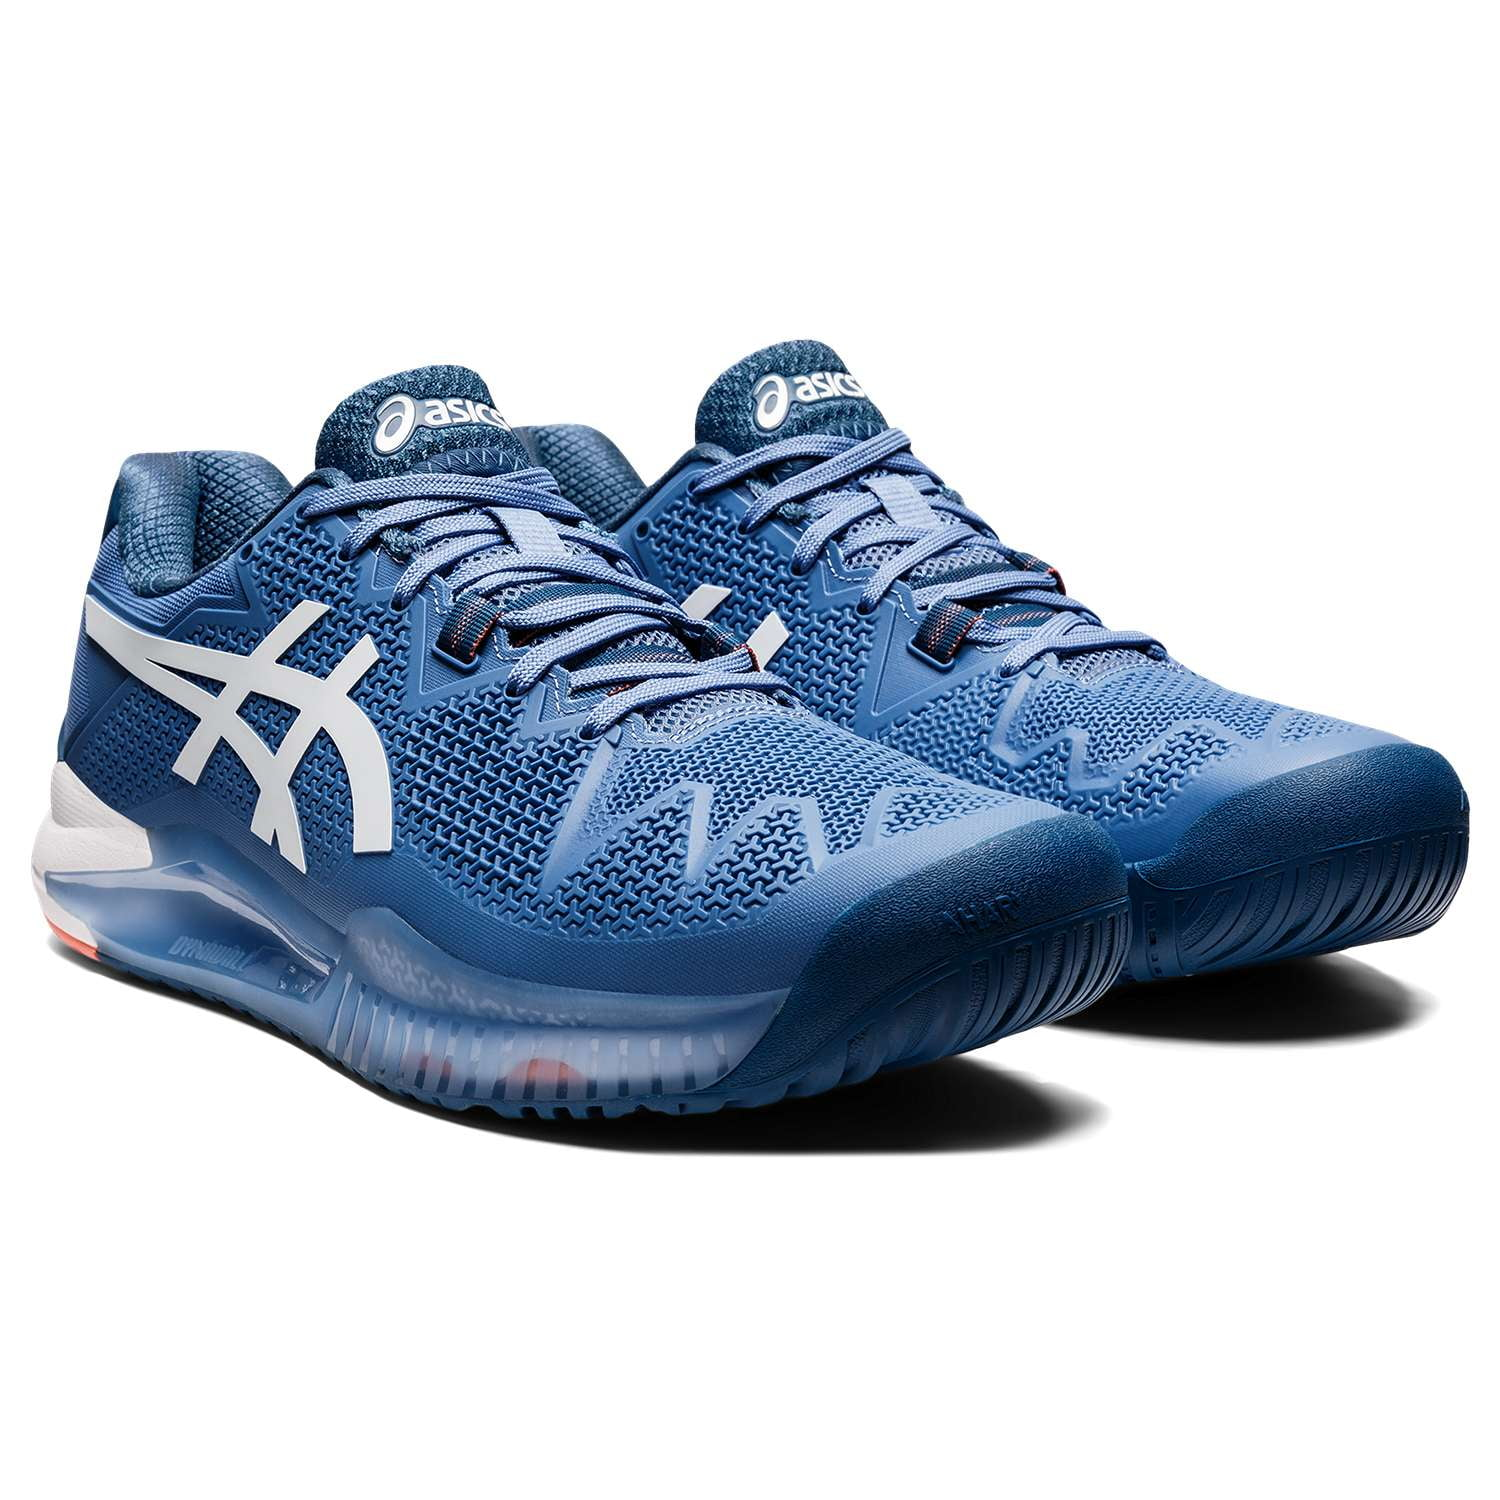 Asics Men's Gel-Resolution 8 Tennis Shoes In Blue Harmony/White - Tennis Shoes - Asics - ATR Sports